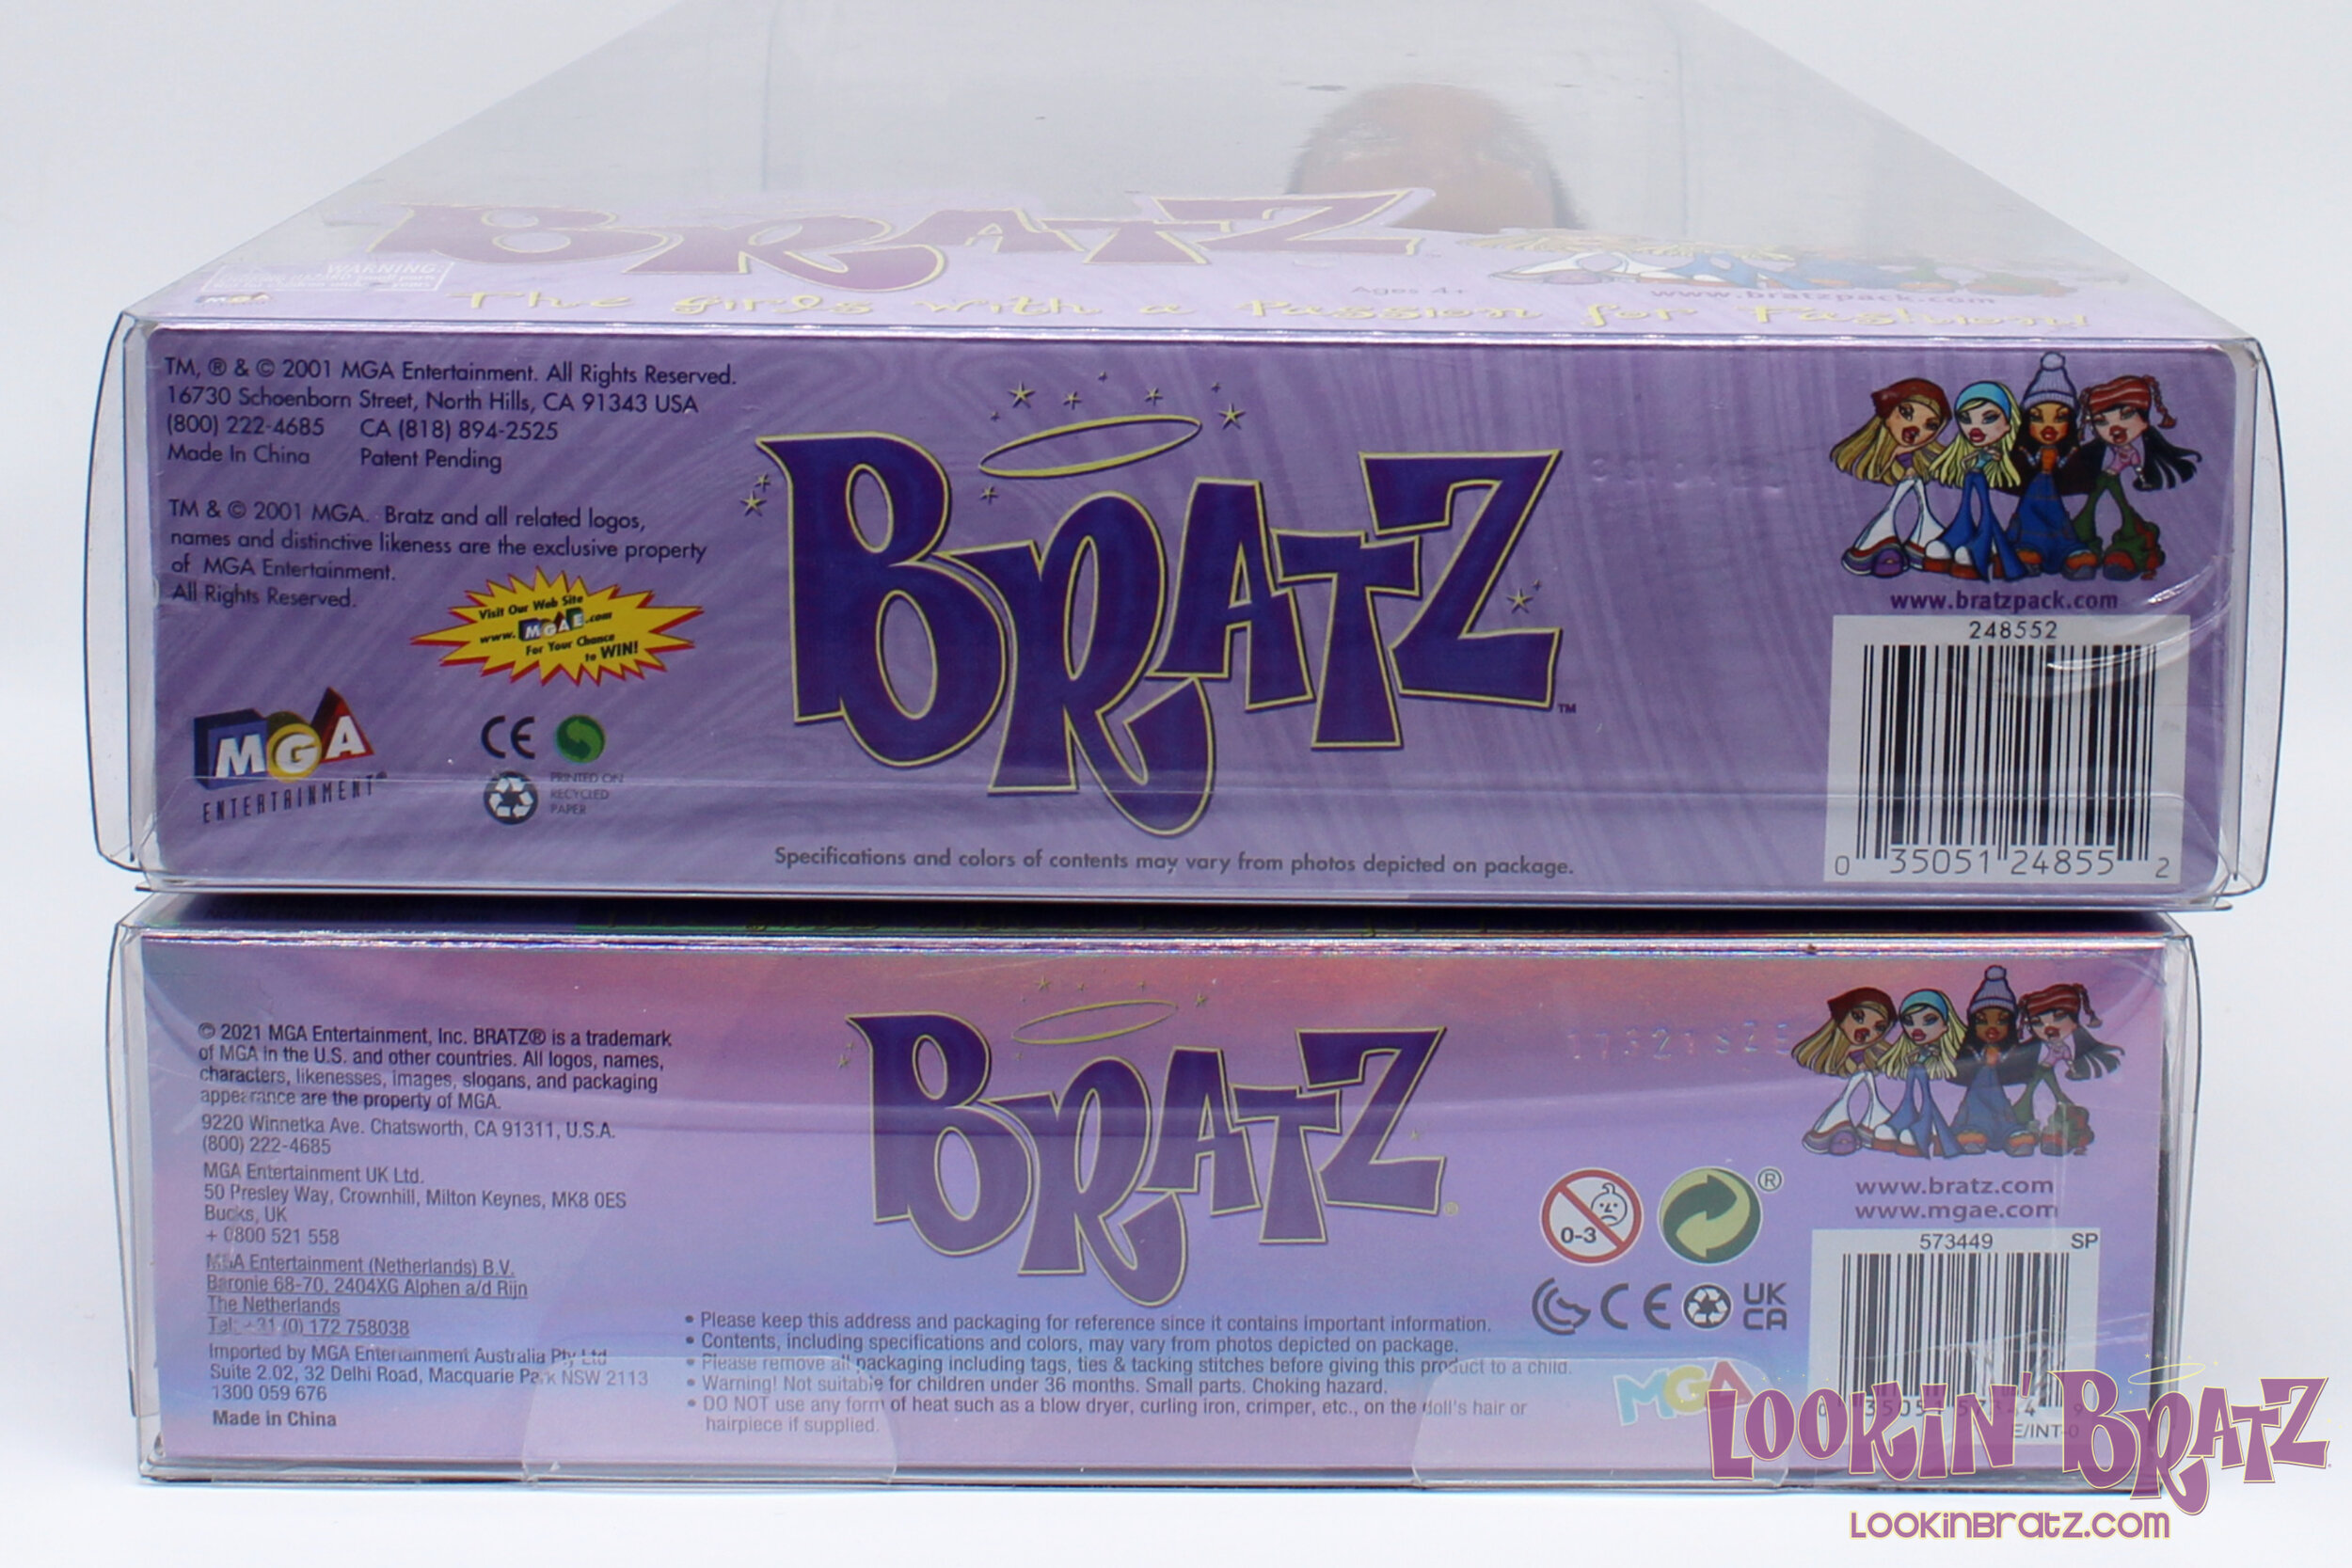 Bratz First Edition 2005 Re-Release vs. 2021 Re-Release Sasha (Bottom)